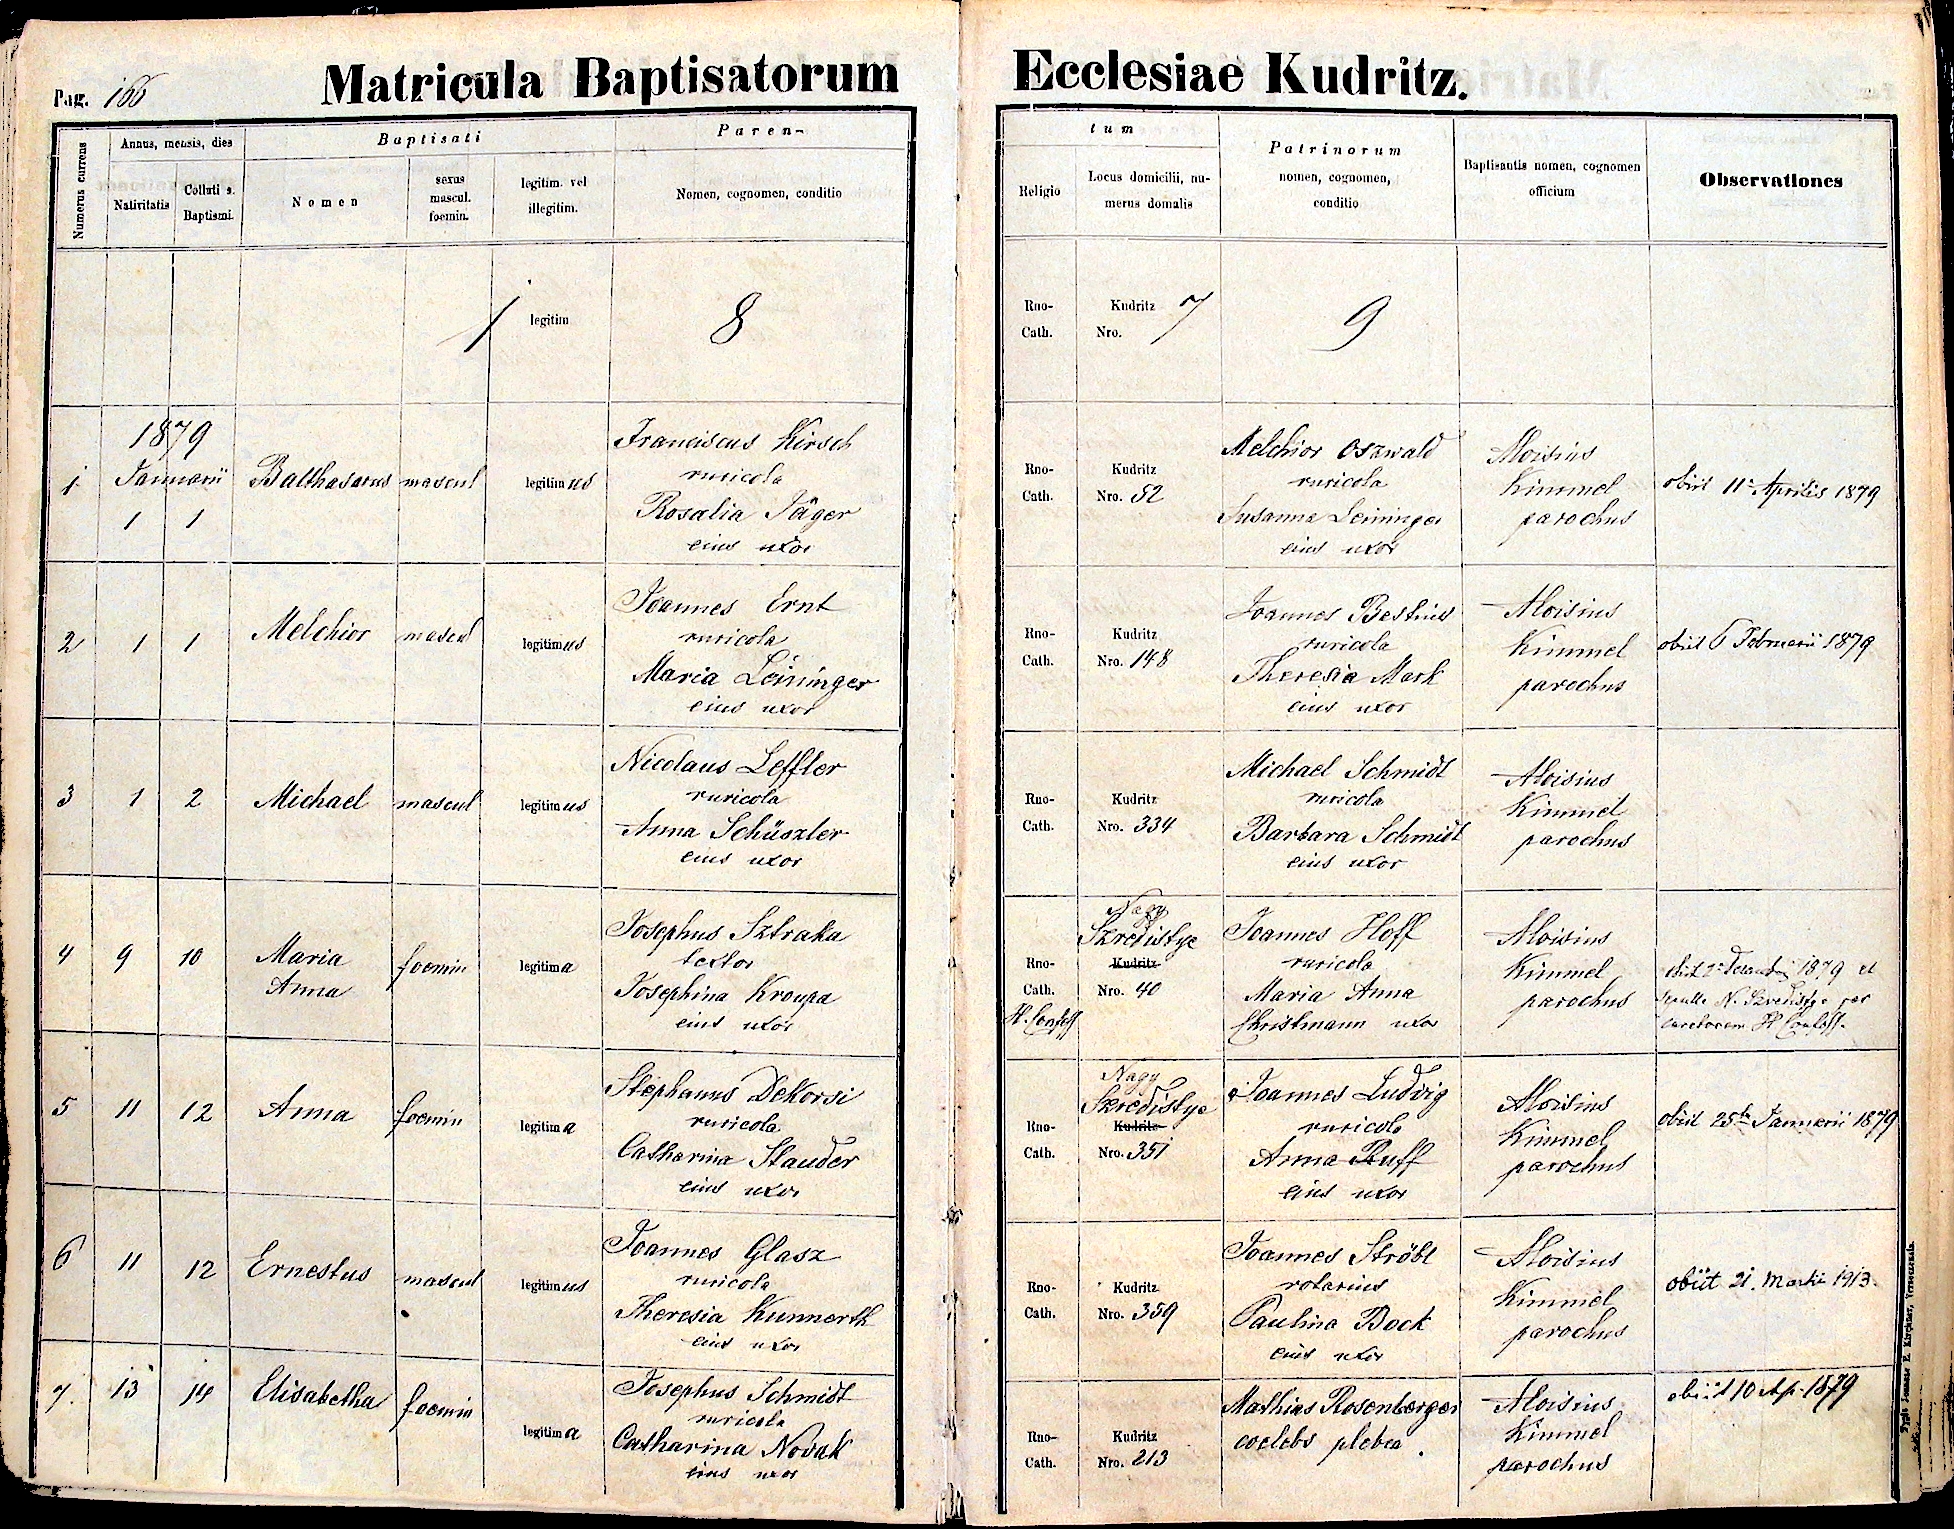 images/church_records/BIRTHS/1870-1879B/1879/166